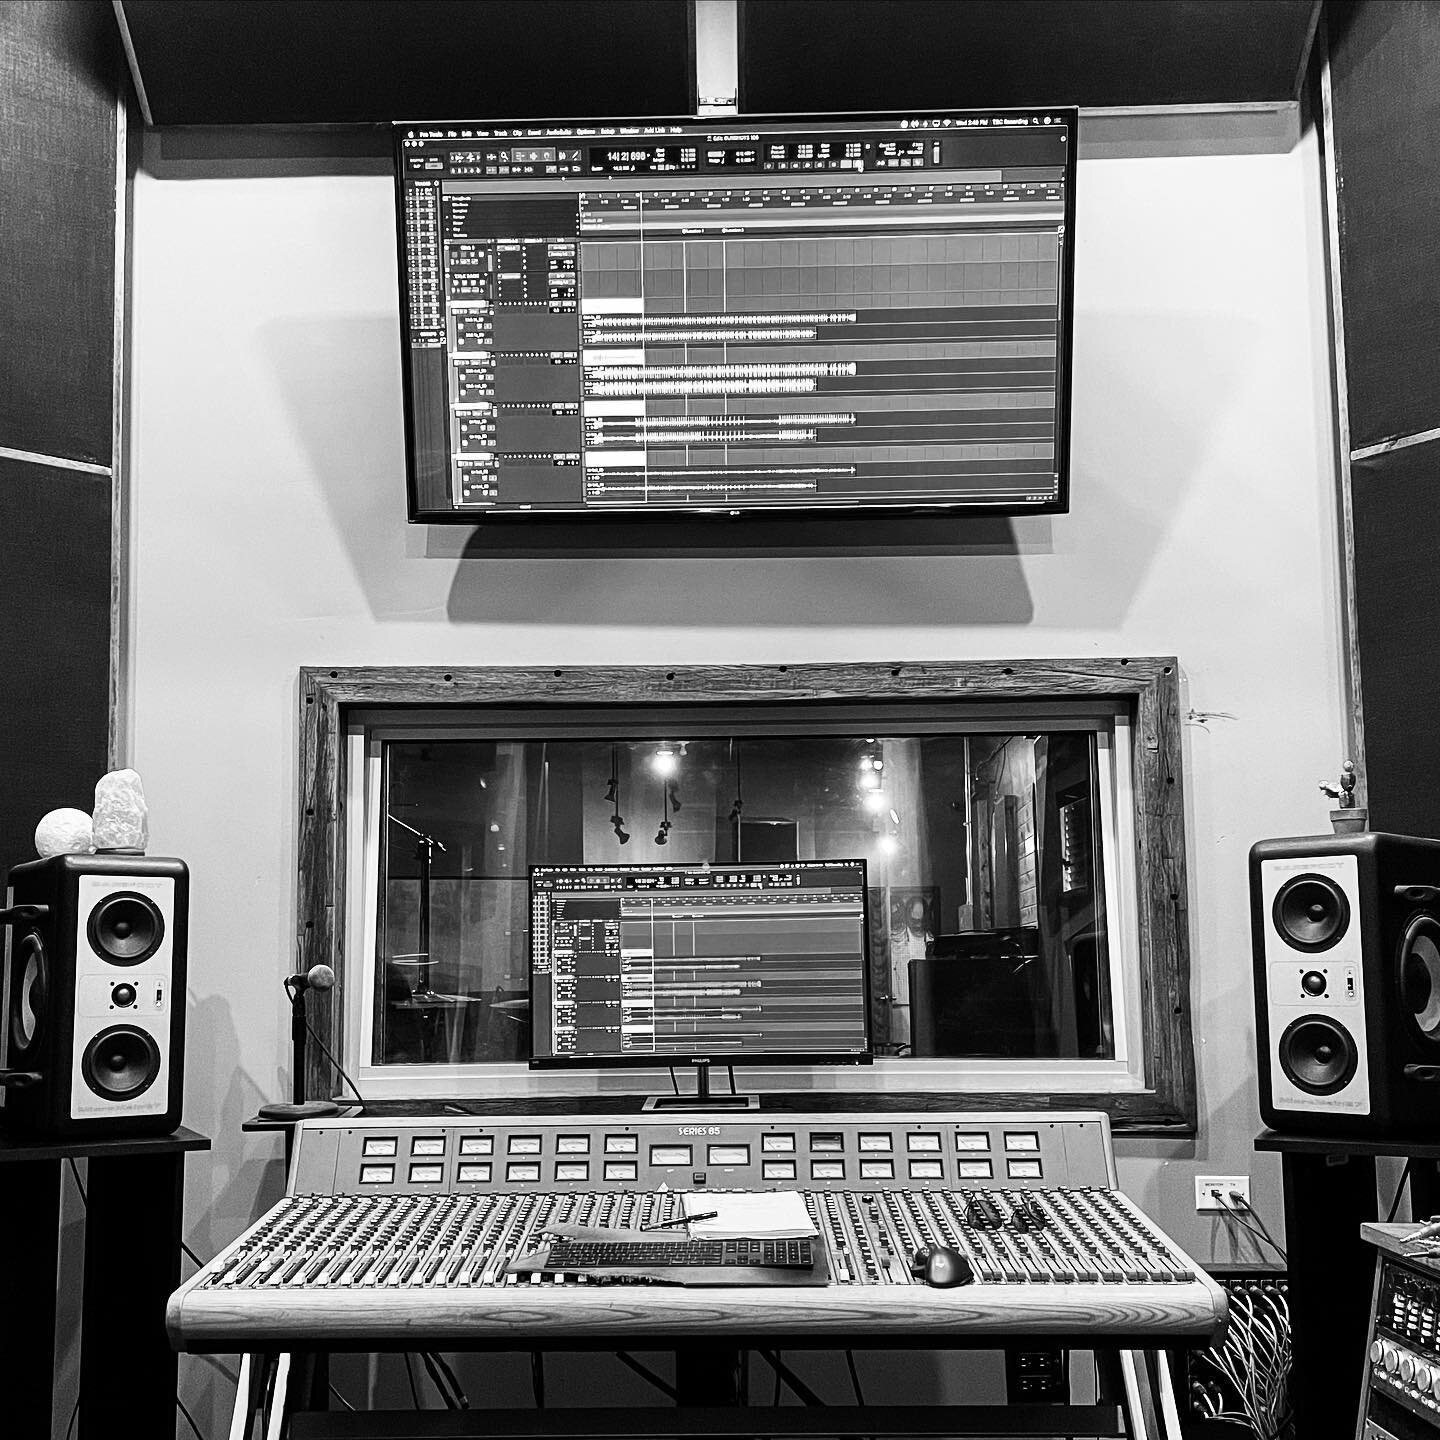 Today&rsquo;s office. 
.
.
.
.
.
.
.
.
.
.
.
.
.
#recordingstudio #recordingengineer #recording #thebandcave #centerscenes #thefrickashinas #denver #producer #producerlife #rockmusic #rock #barefoot #trident #music #punkrock #recordingartist #recordi